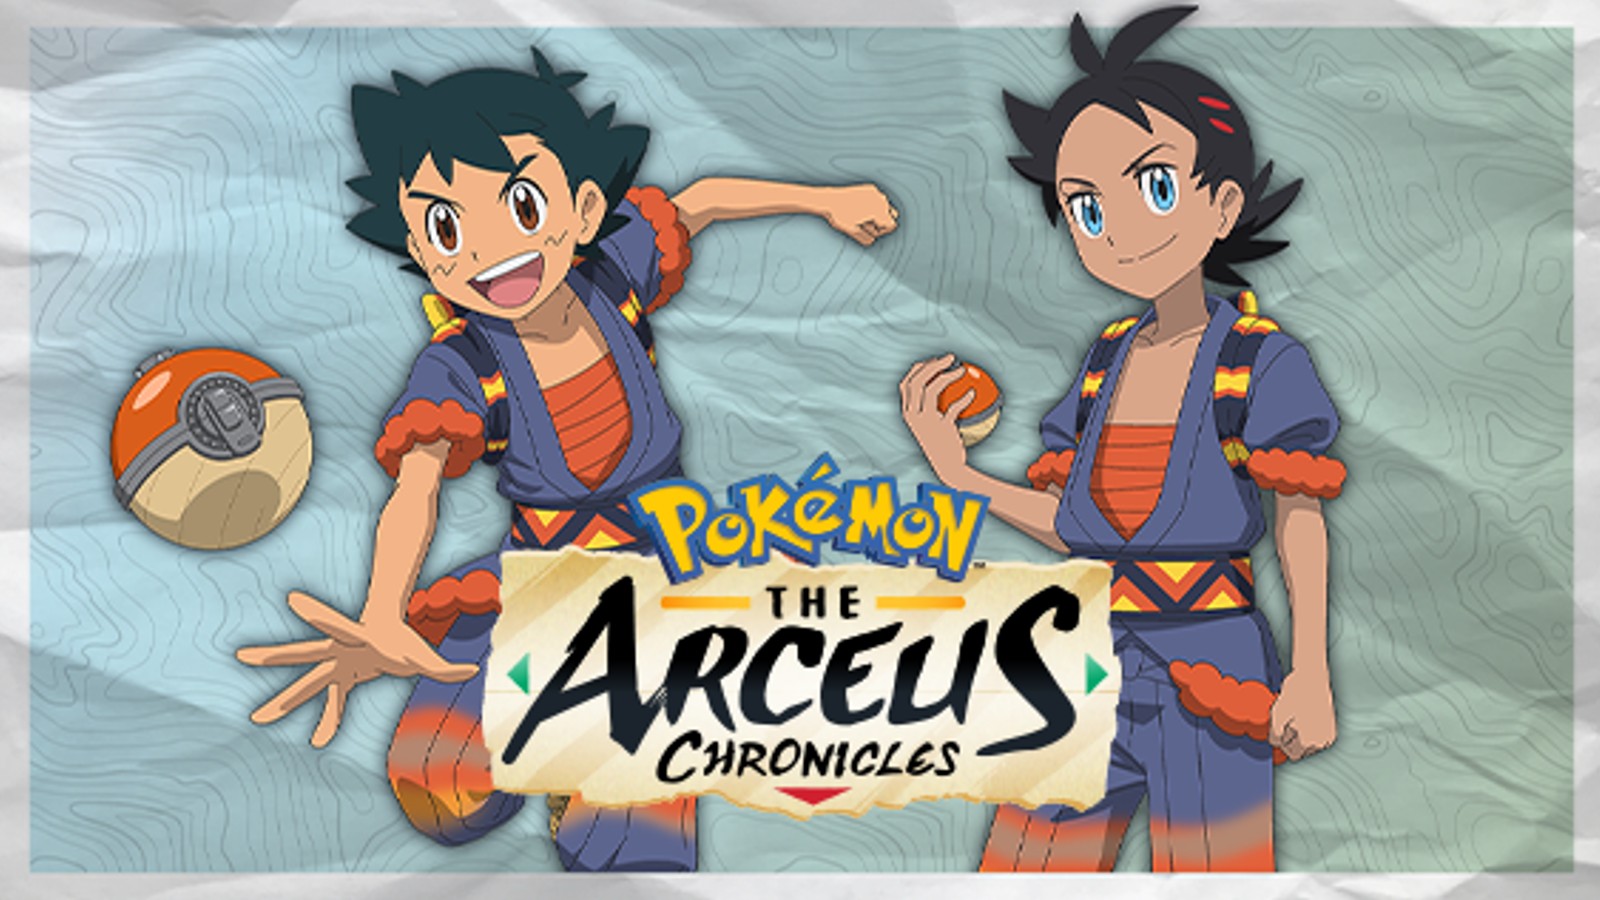 Coming Soon Pokémon The Arceus Chronicles on Netflix  Pokemoncom